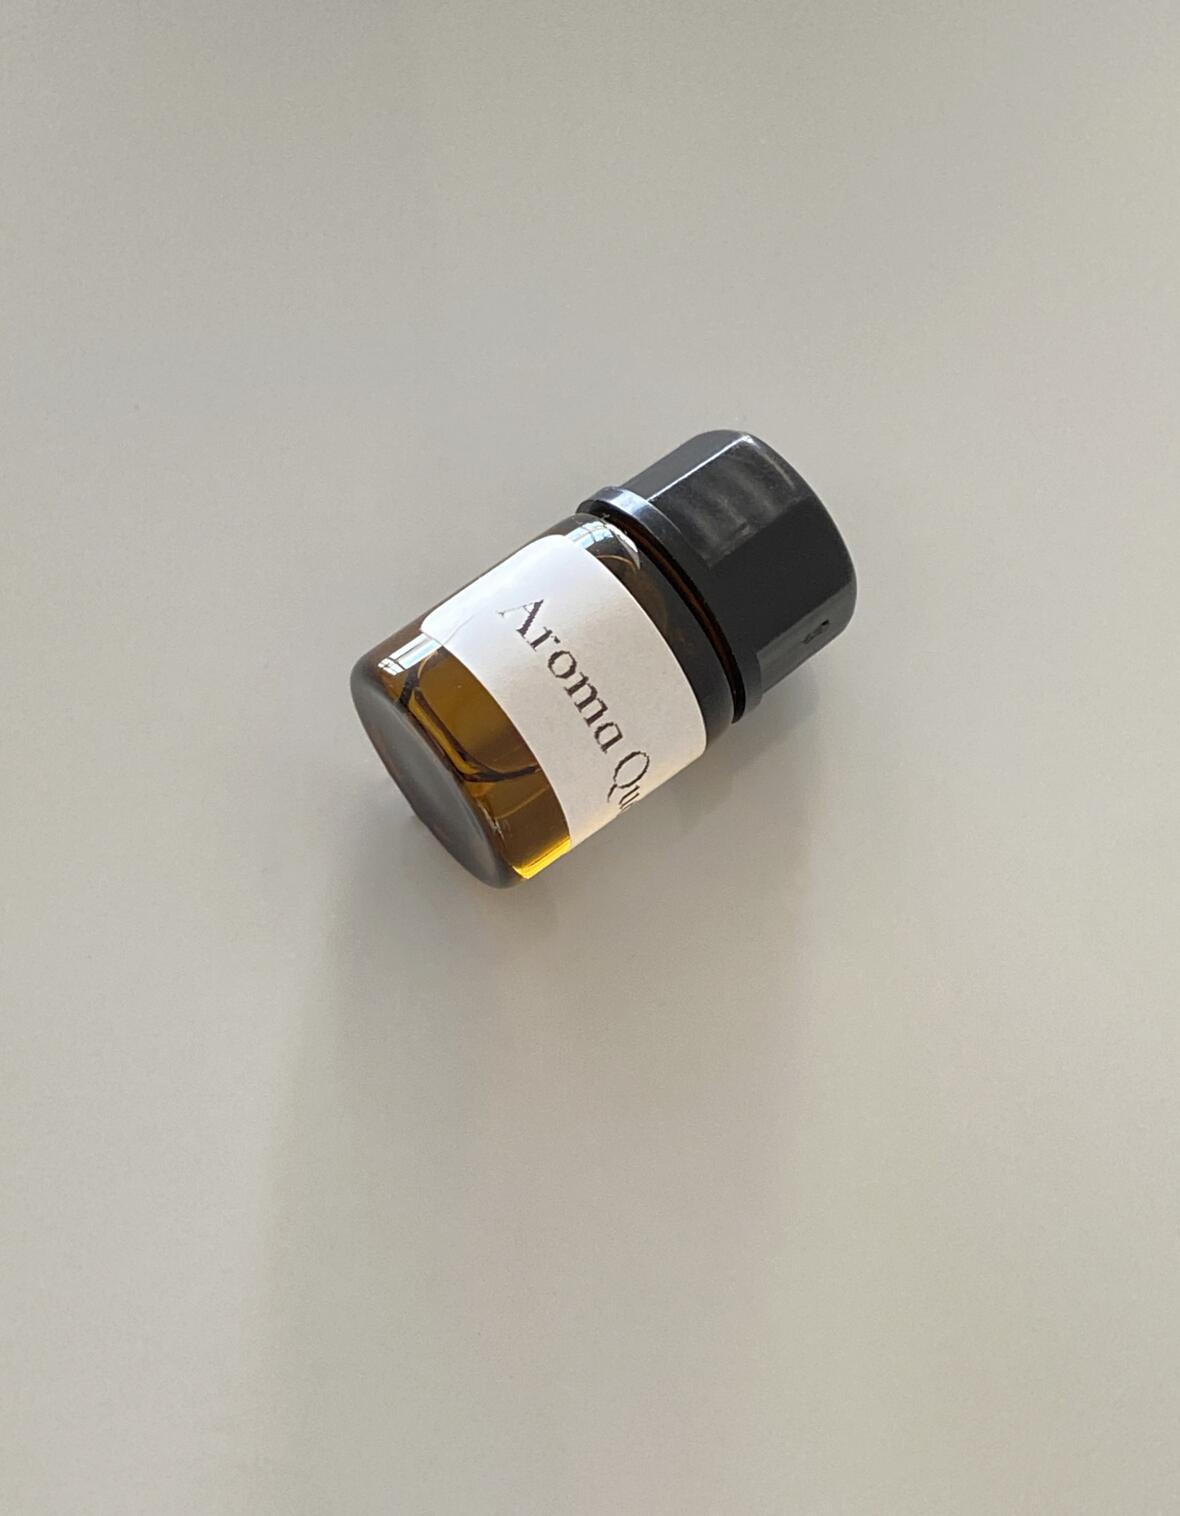 Neroli Blossom Aromatherapy Essential Oil